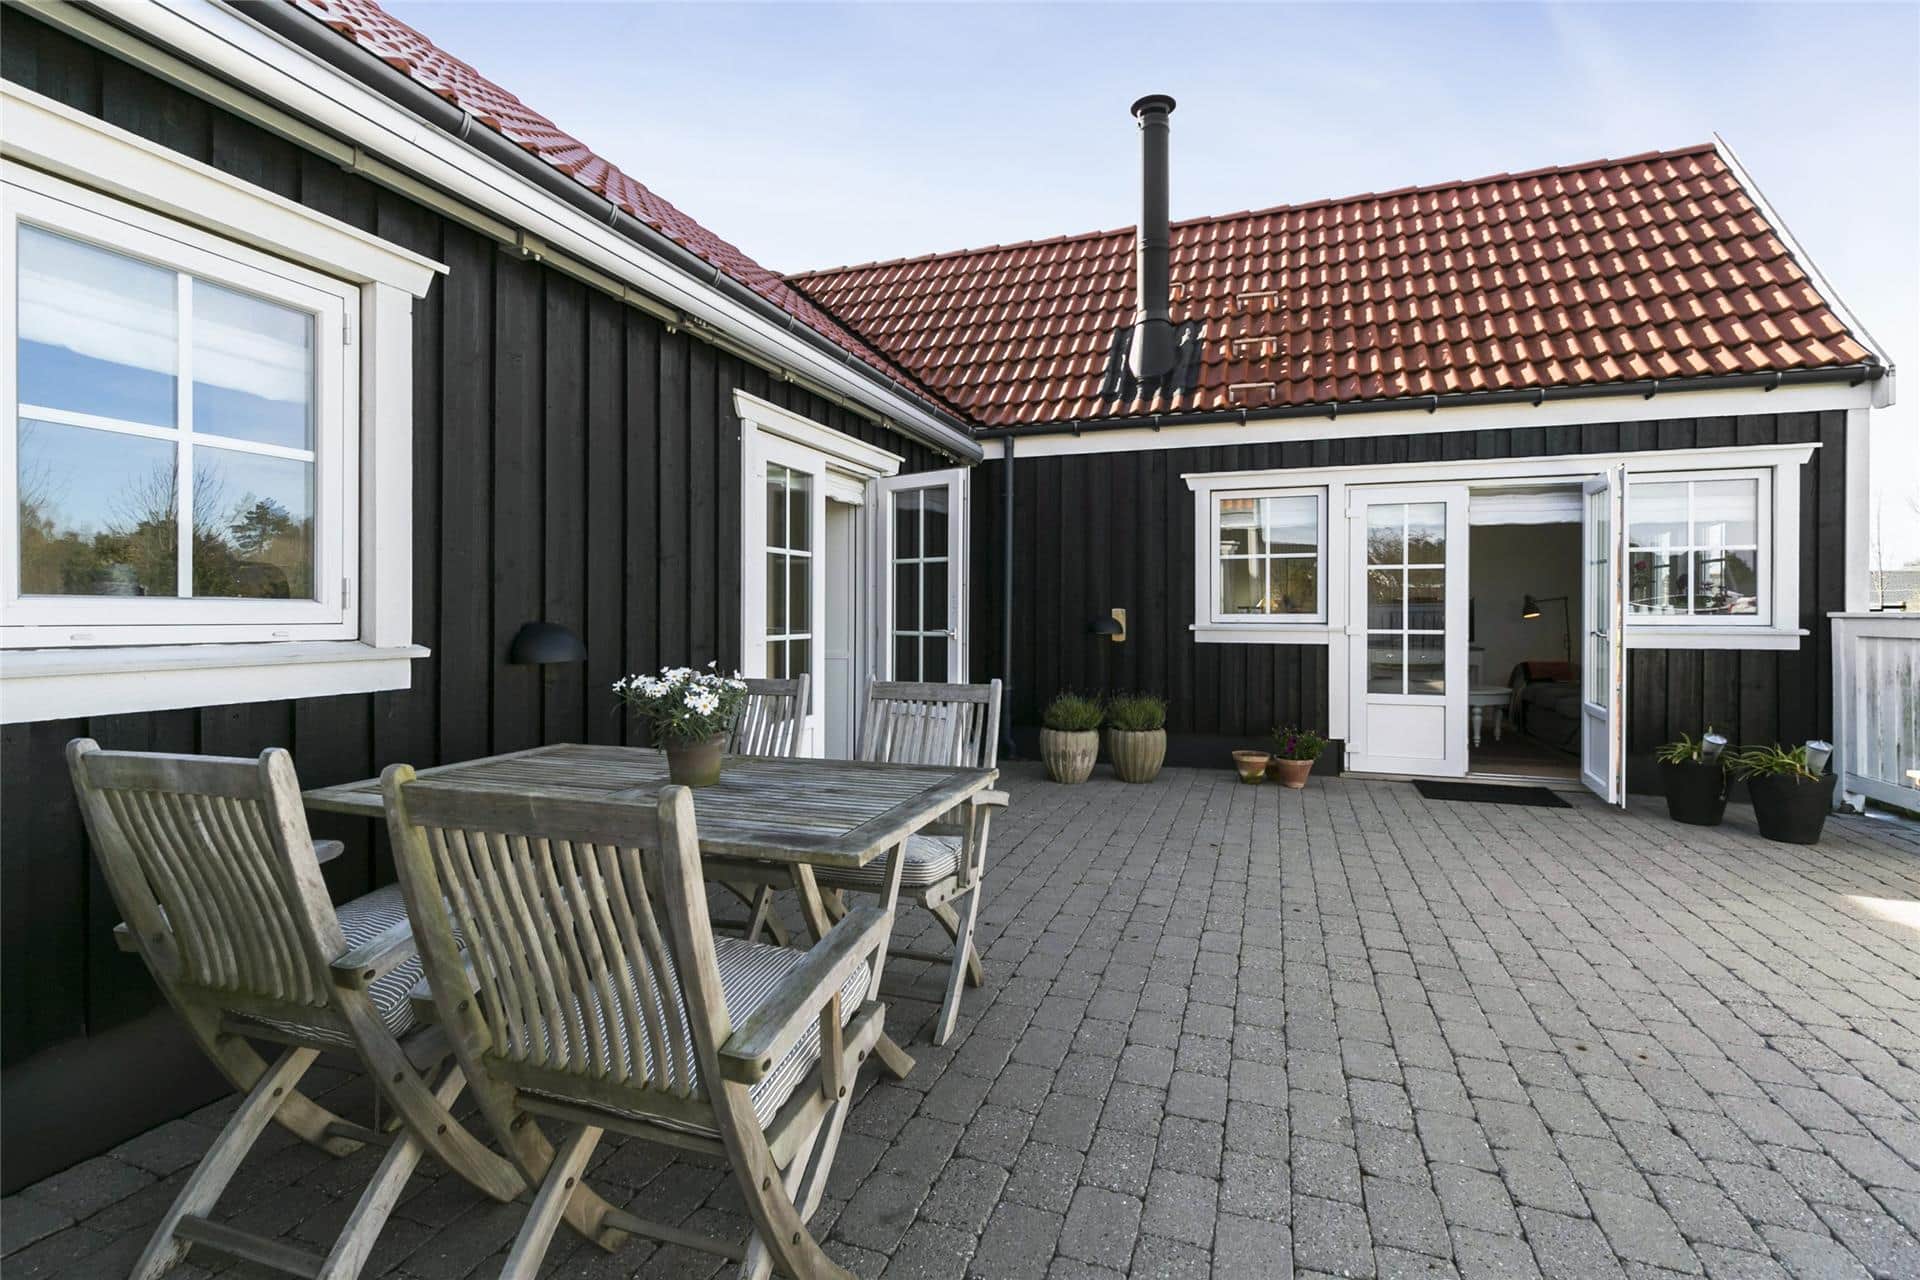 Image 0-1336 Holiday-home 1061-N, Lundebakken 1, DK - 3210 Vejby